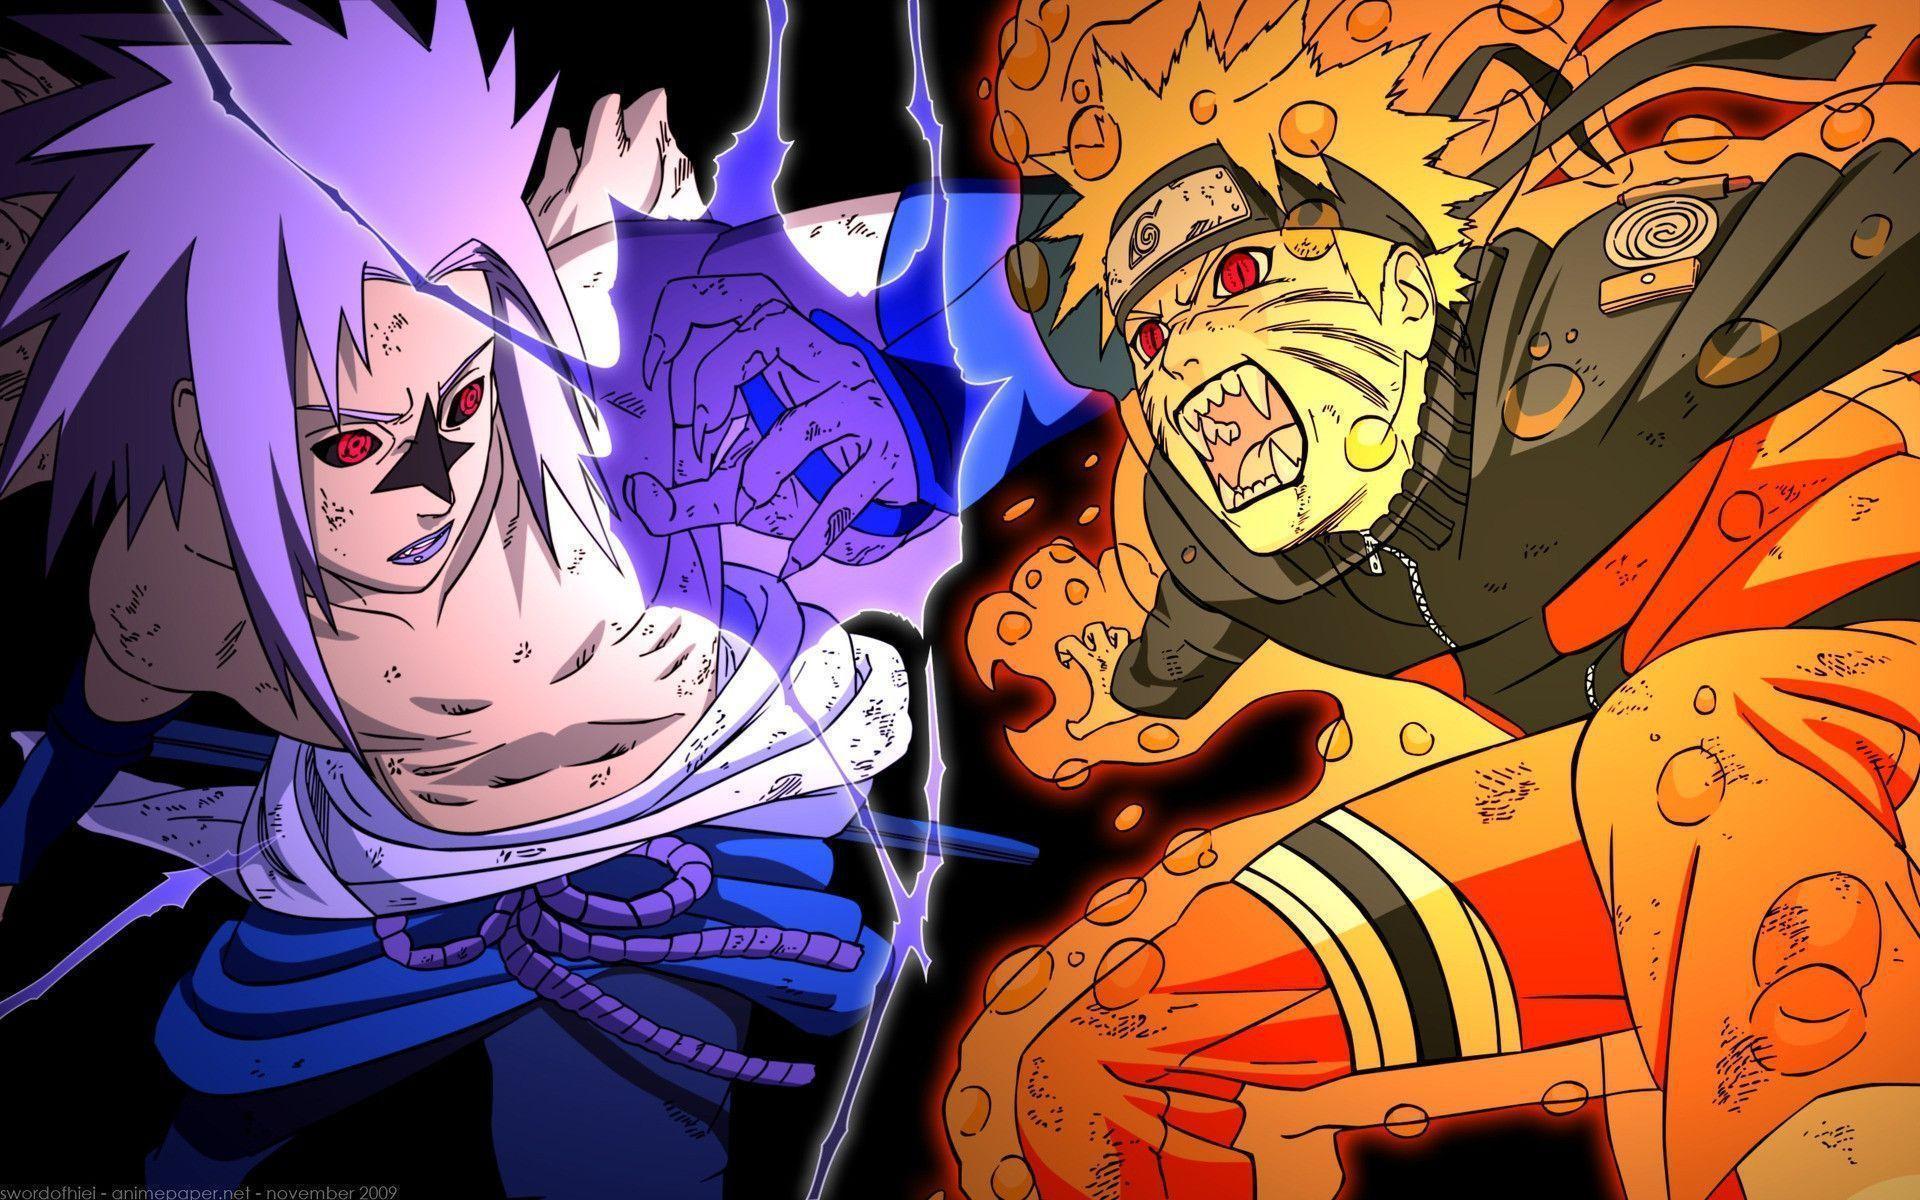 Kumpulan Gambar Naruto Terbaru 2015